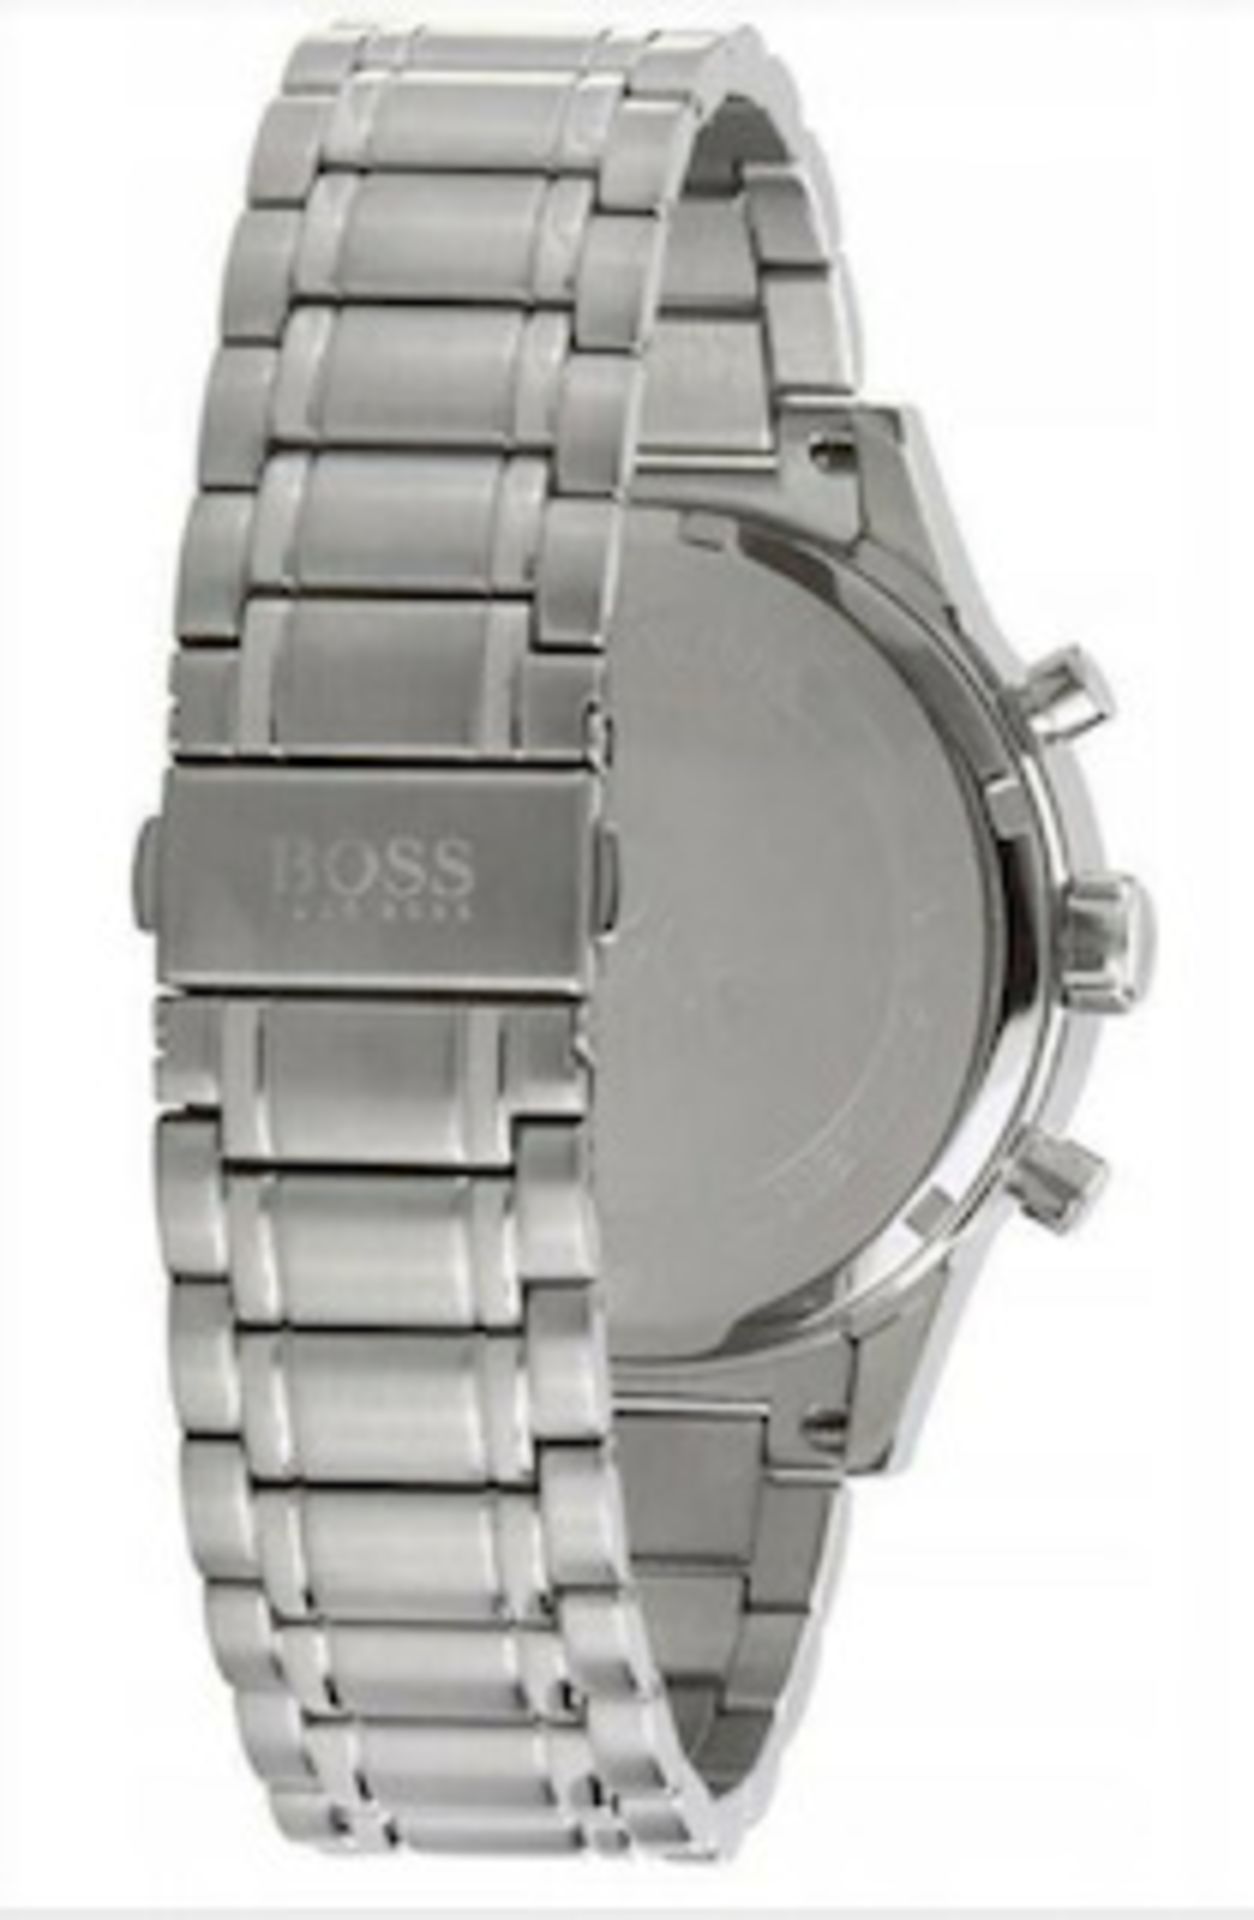 HUGO BOSS Men's Aeroliner Silver Bracelet Chronograph Watch 1513182 - Image 5 of 7